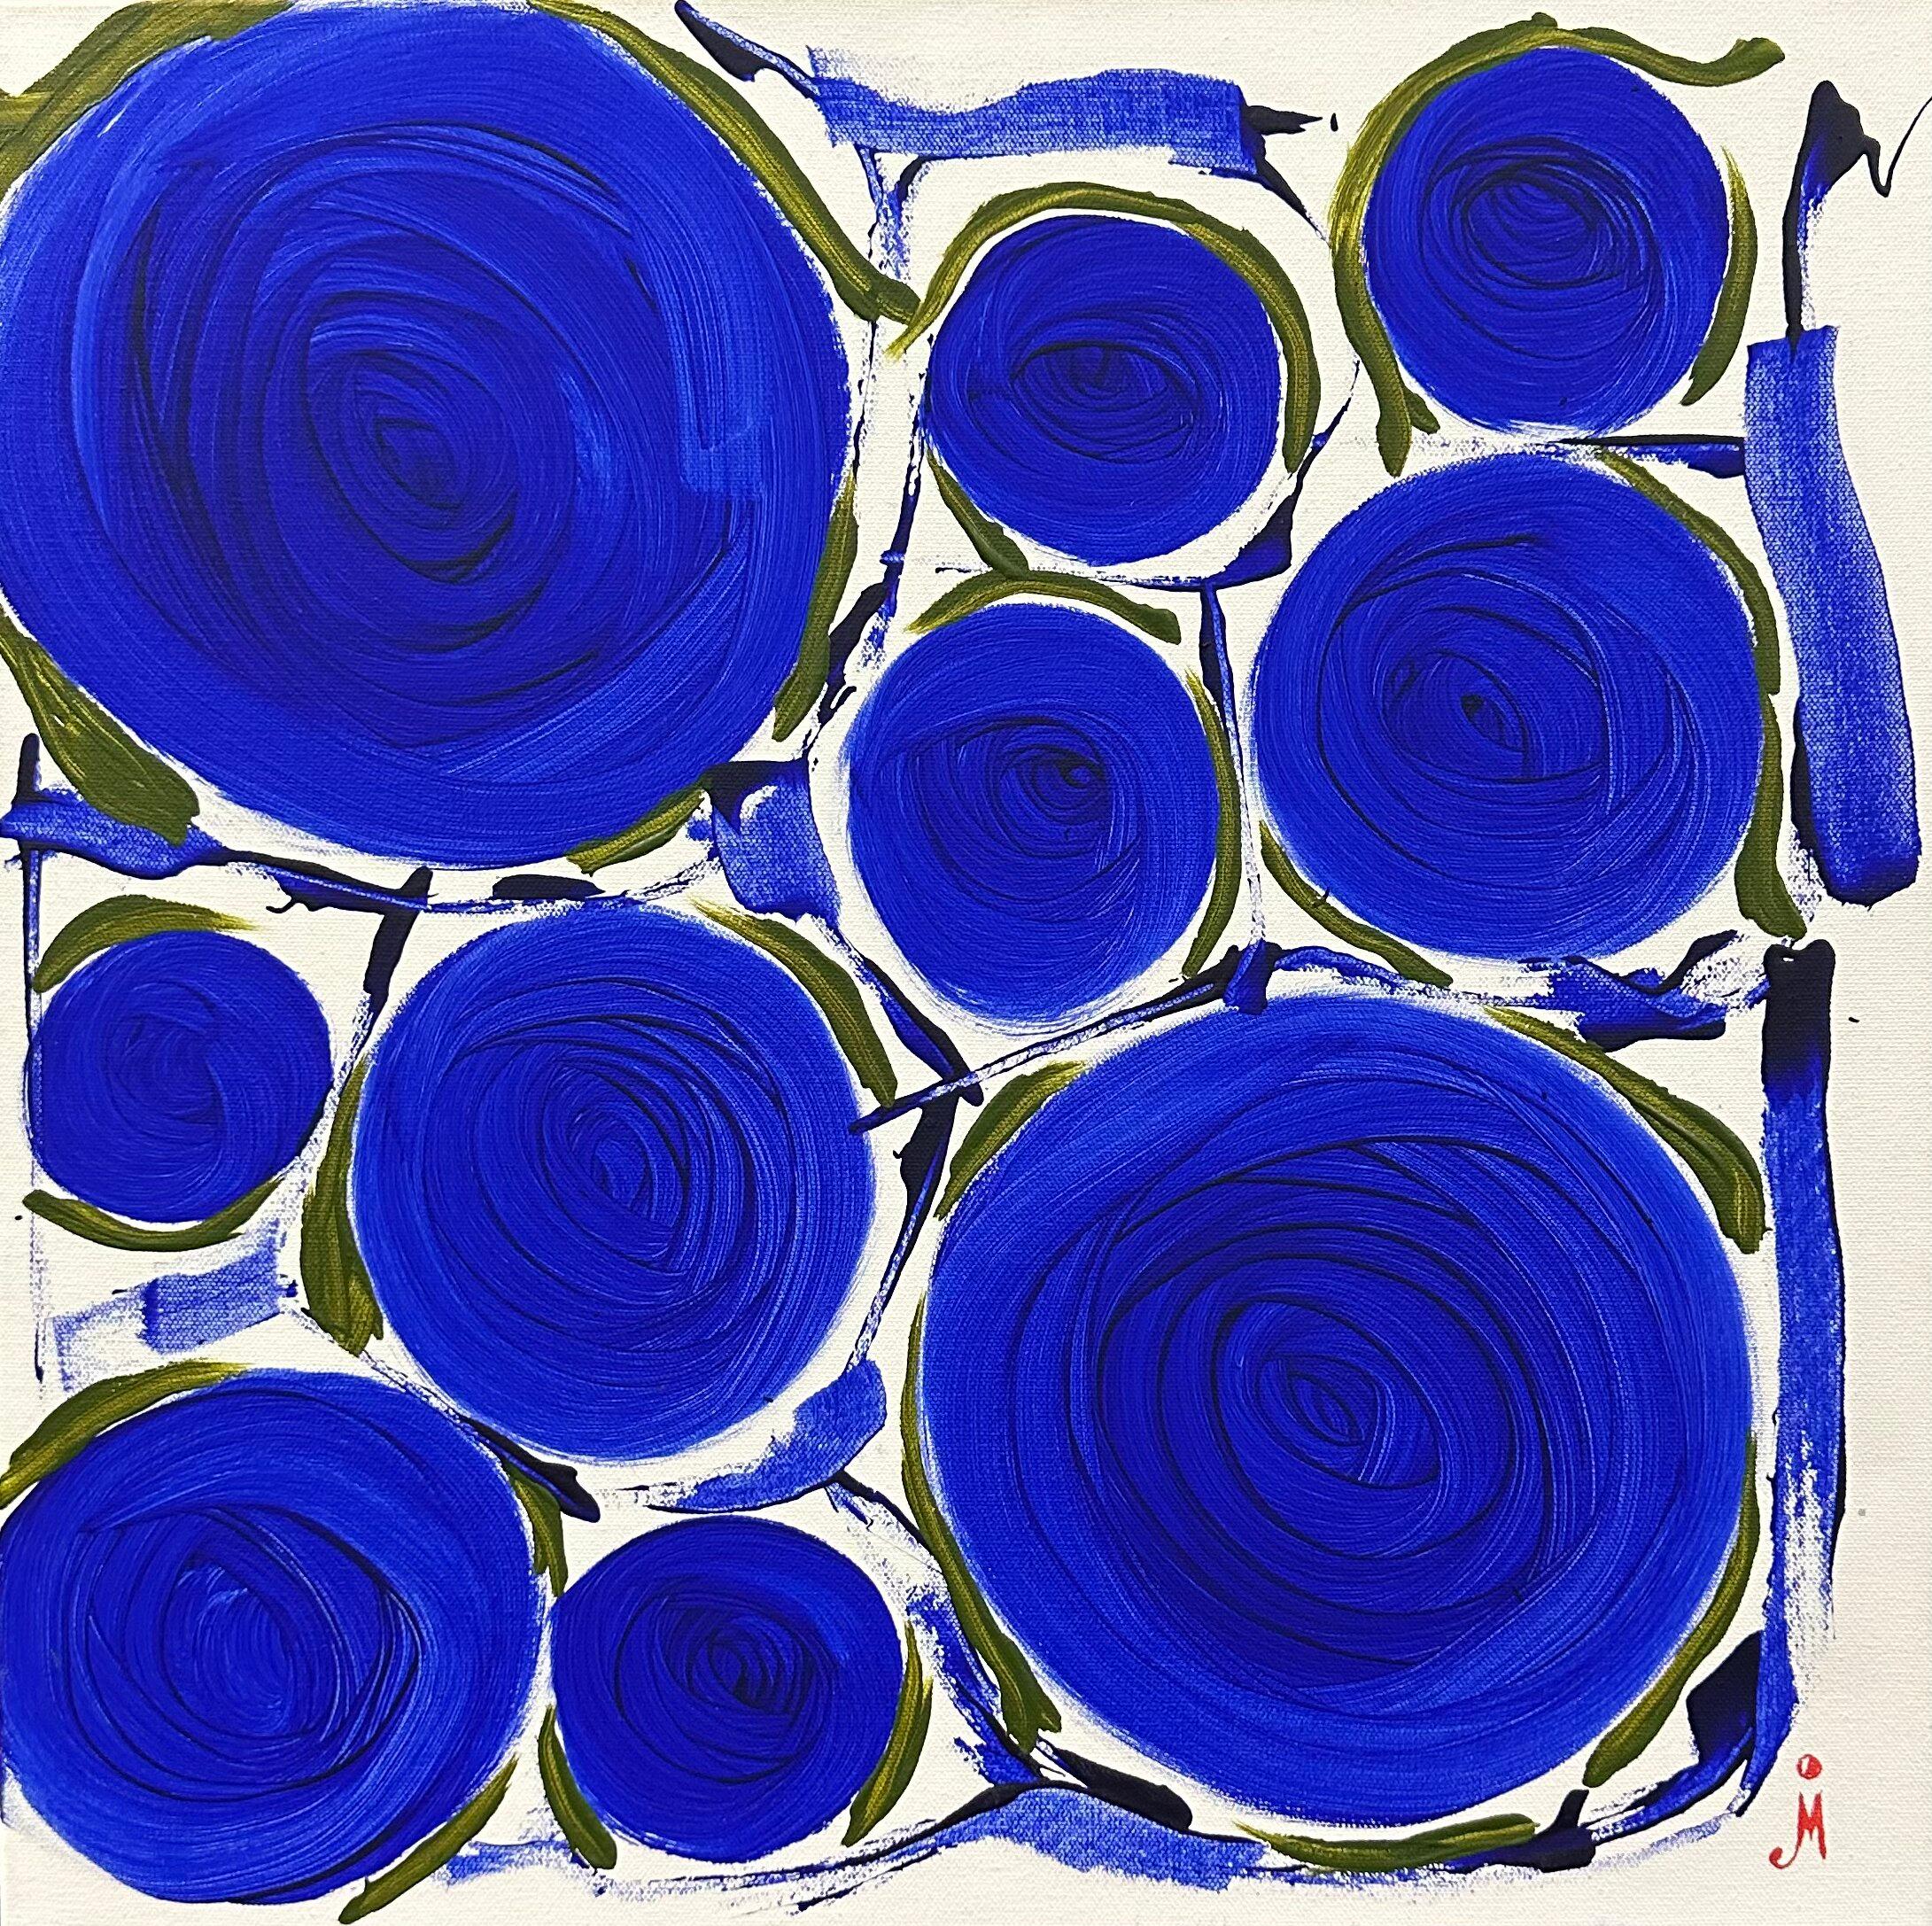 Blue Roses #2 - Painting by J. Oscar Molina